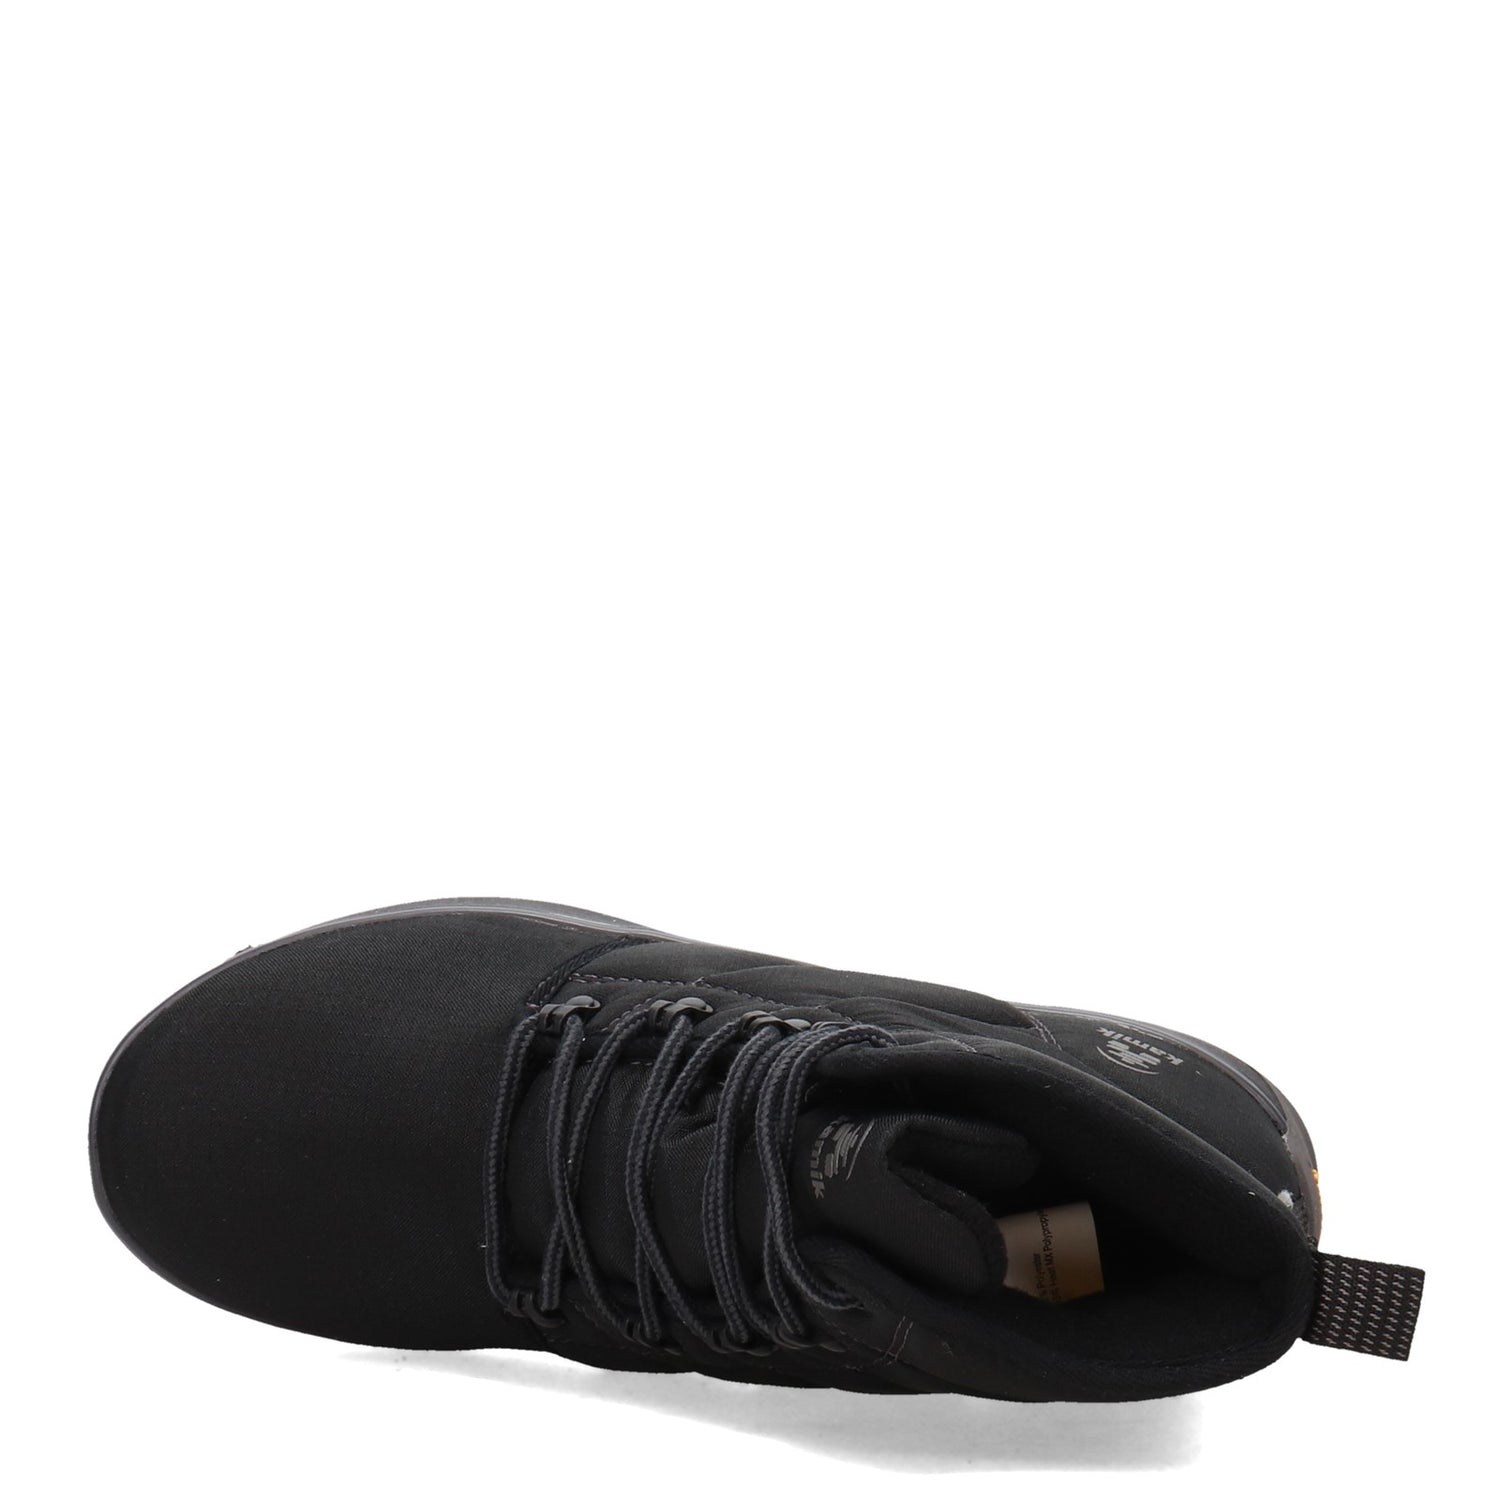 Peltz Shoes  Men's Kamik Spencer N Boot BLACK NK0315-BLK